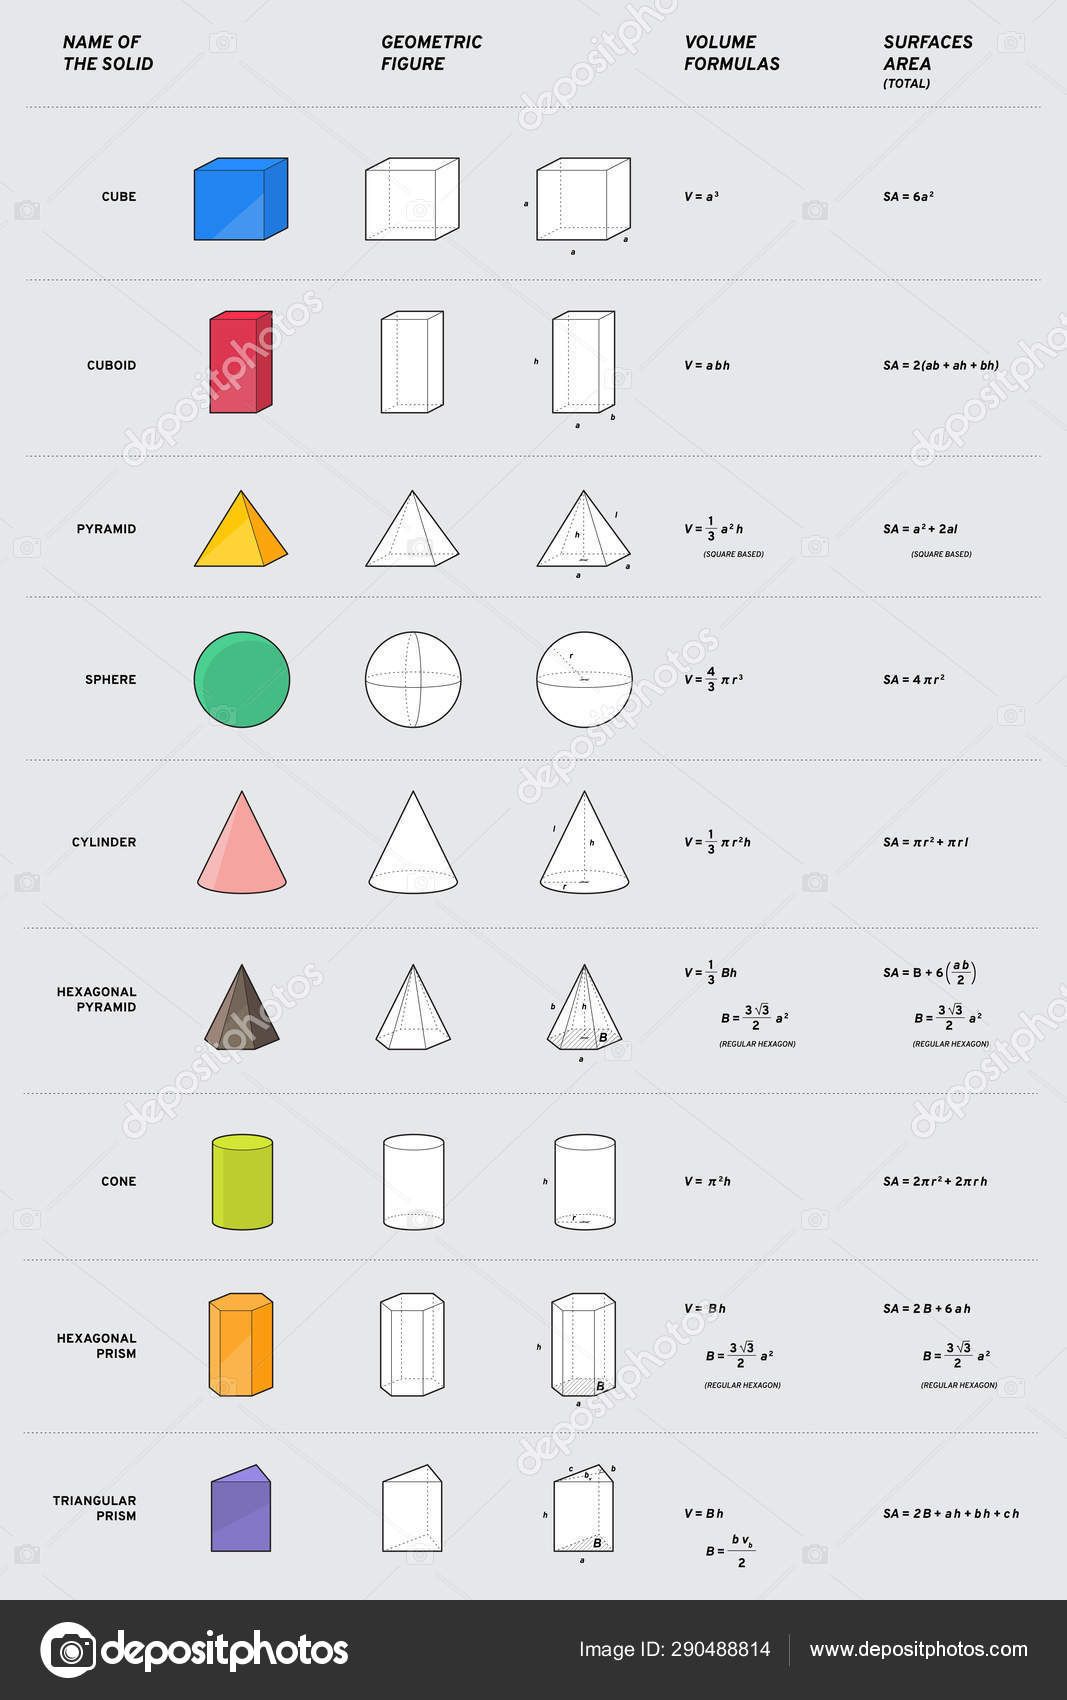 Cylinder Cone And Pyramid Charts